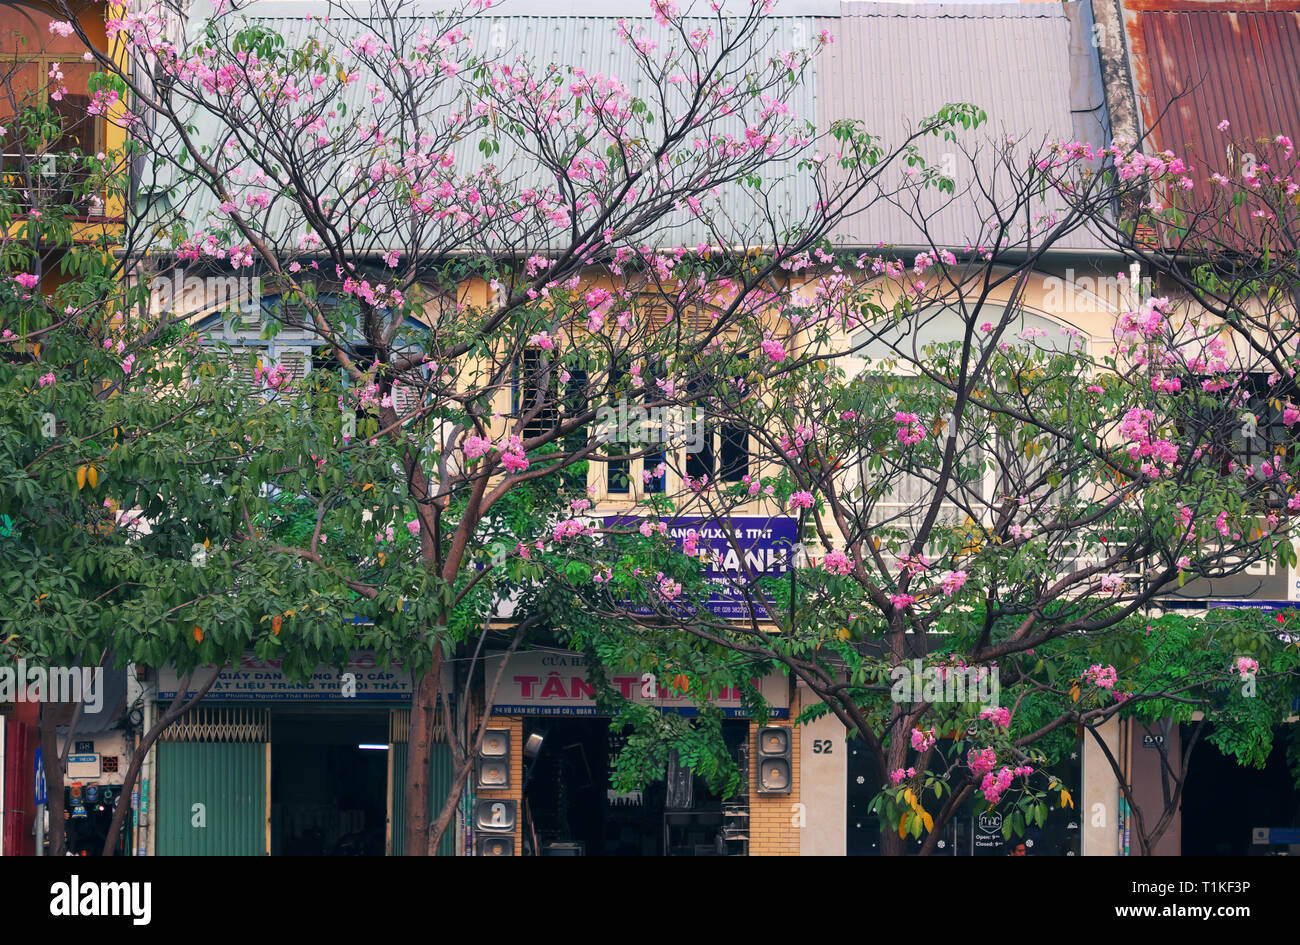 Street of Saigon in tabebuia rosea flower season, pink flower bloom beautiful cover row of old house make romantic scene at Ho Chi Minh city, Vietnam Stock Photo